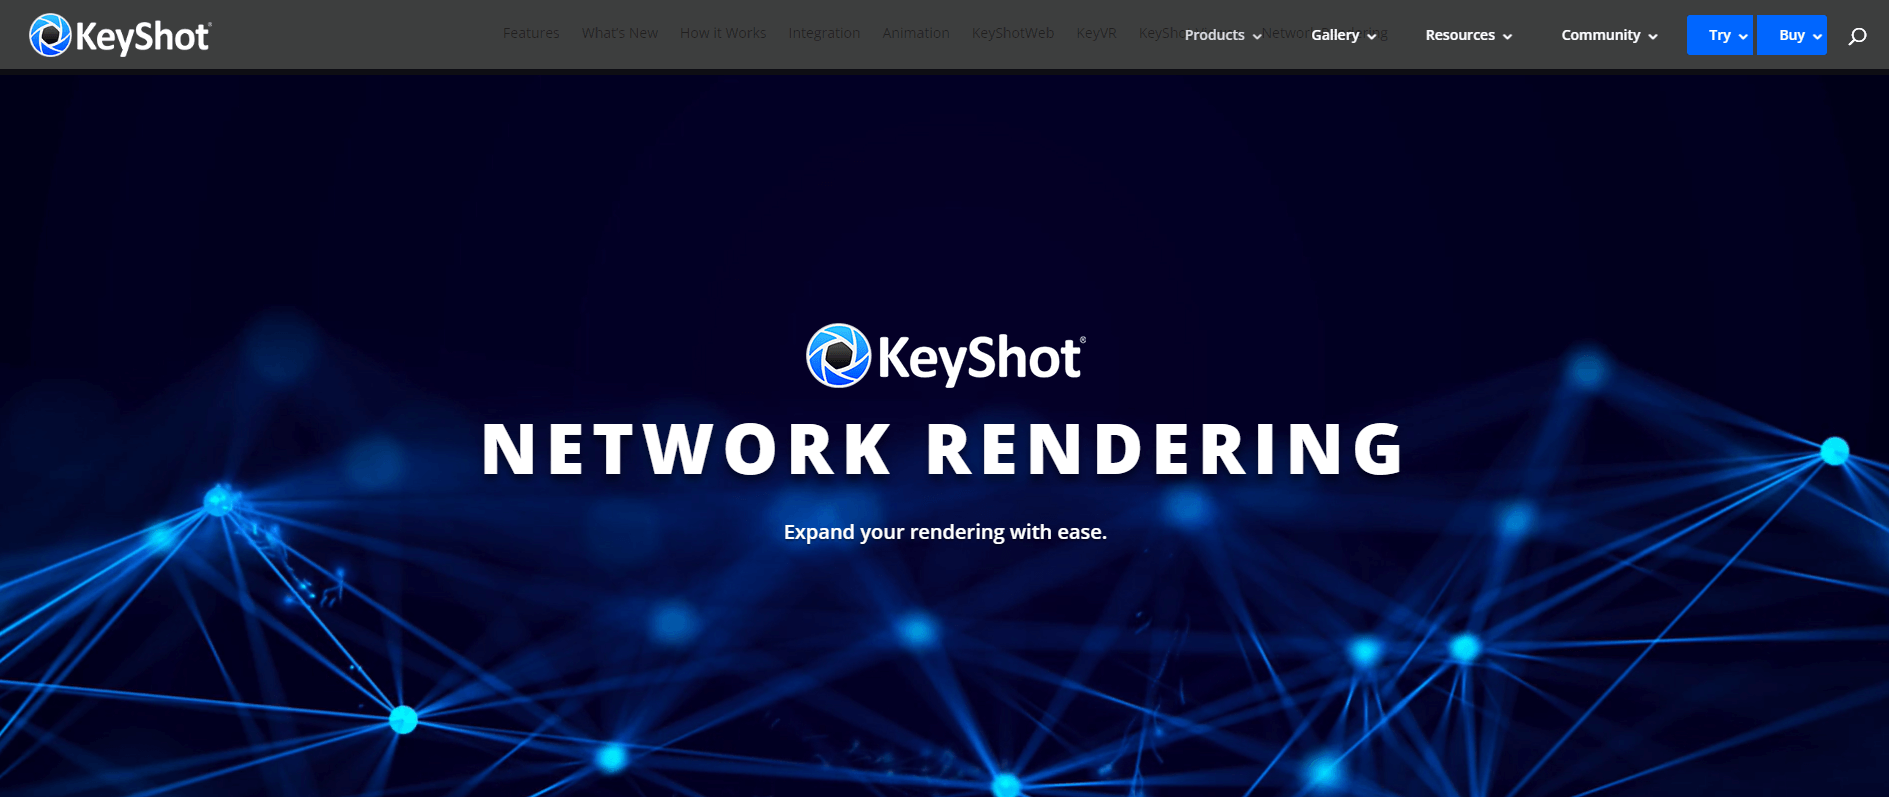 download the last version for apple Keyshot Network Rendering 2023.2 12.1.1.6